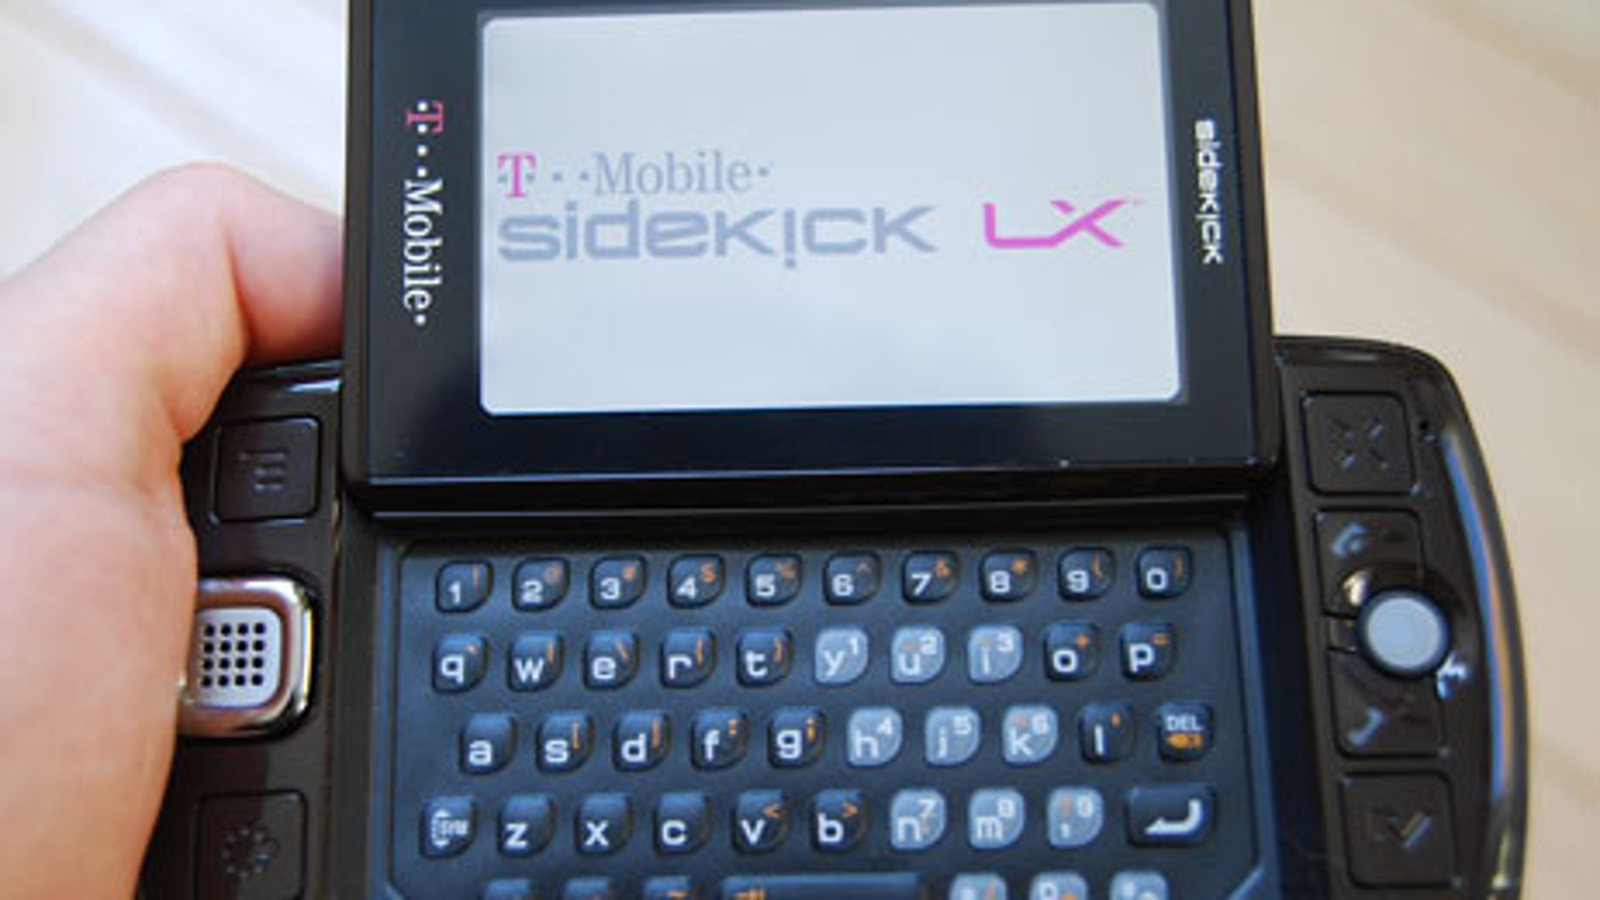 blackberry sidekick phone